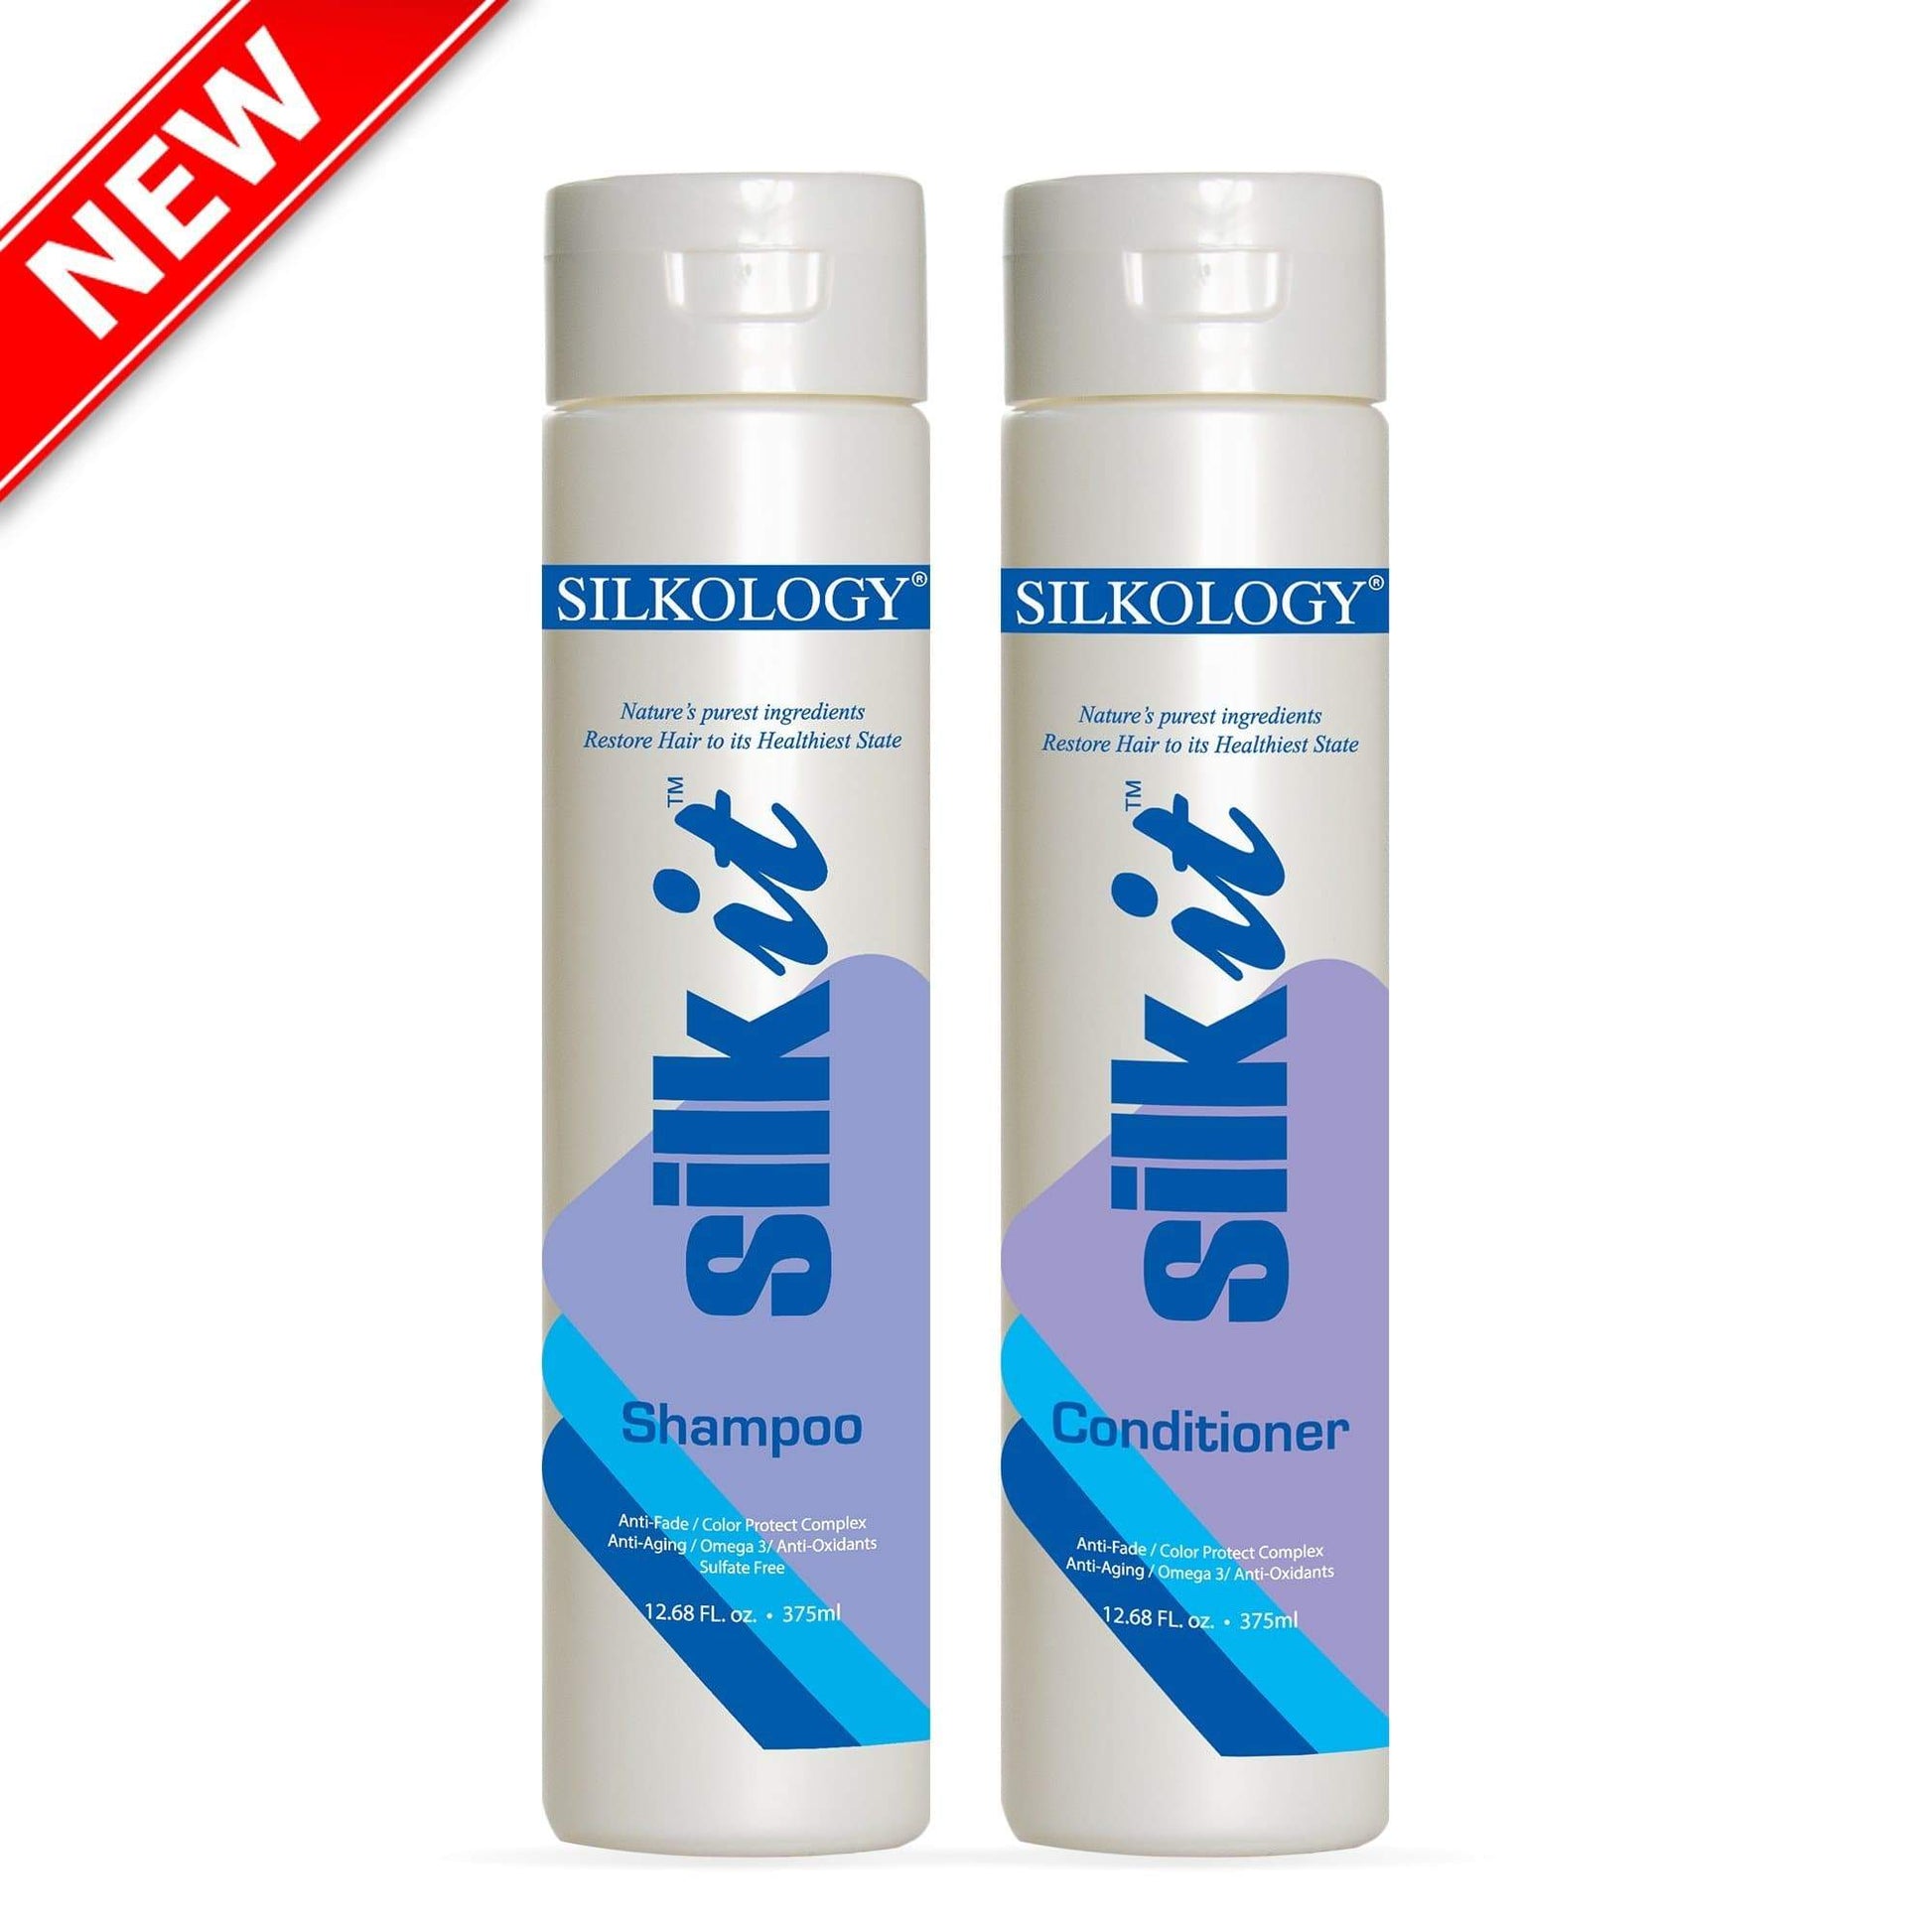 Silkology SilkIt Shampoo and Conditioner Set SHAMPOO AND CONDITIONER SILKOLOGY Duo 12.68 fl. oz 